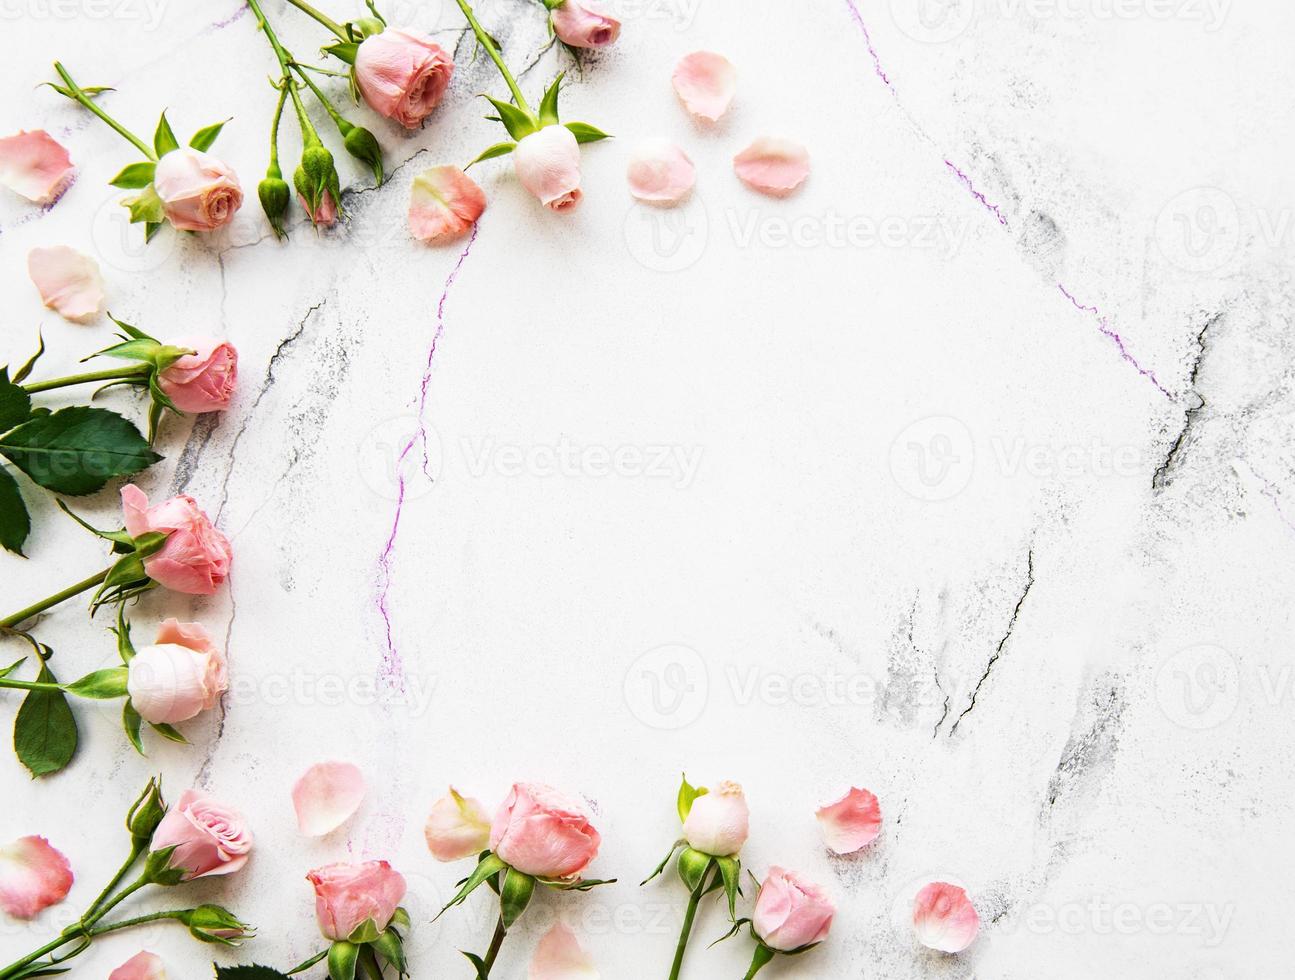 cadre de roses roses photo